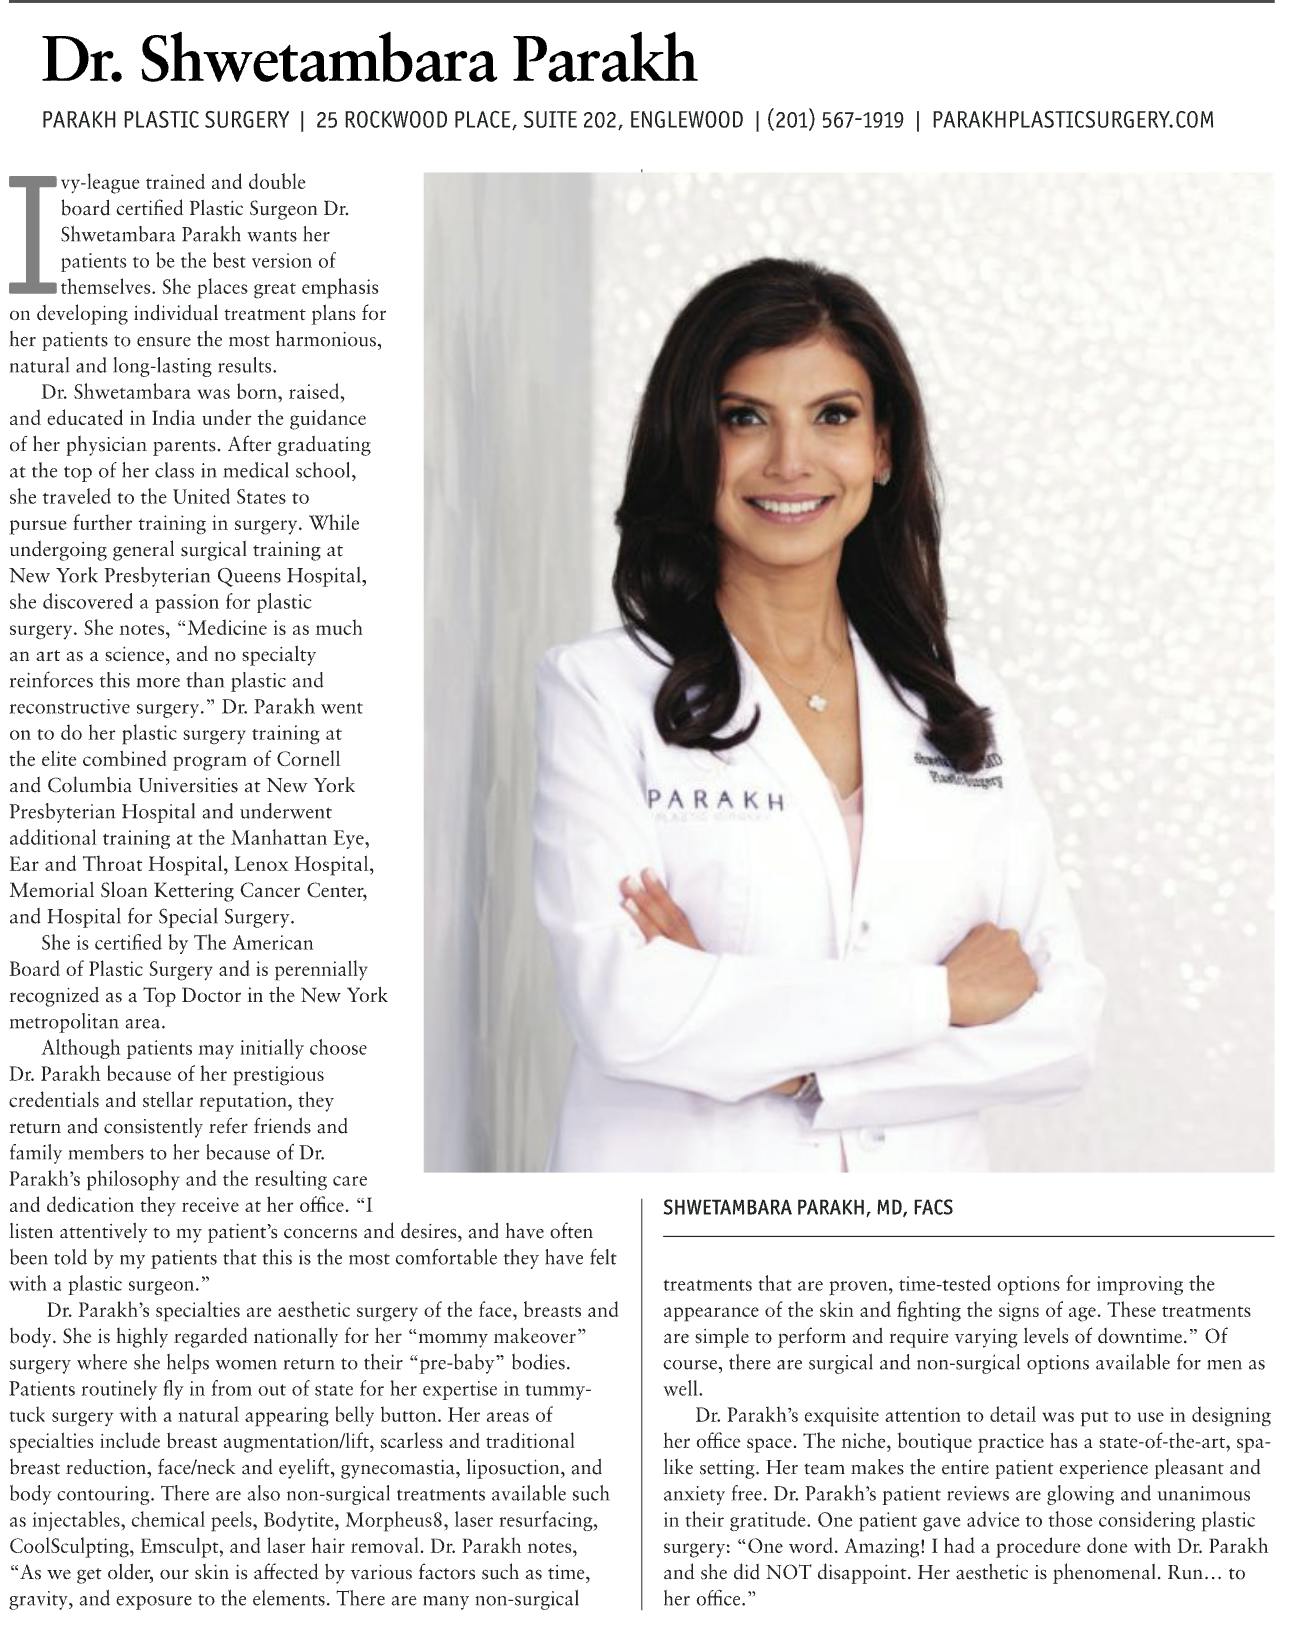 Dr. Parakh recognized in 201 Magazine